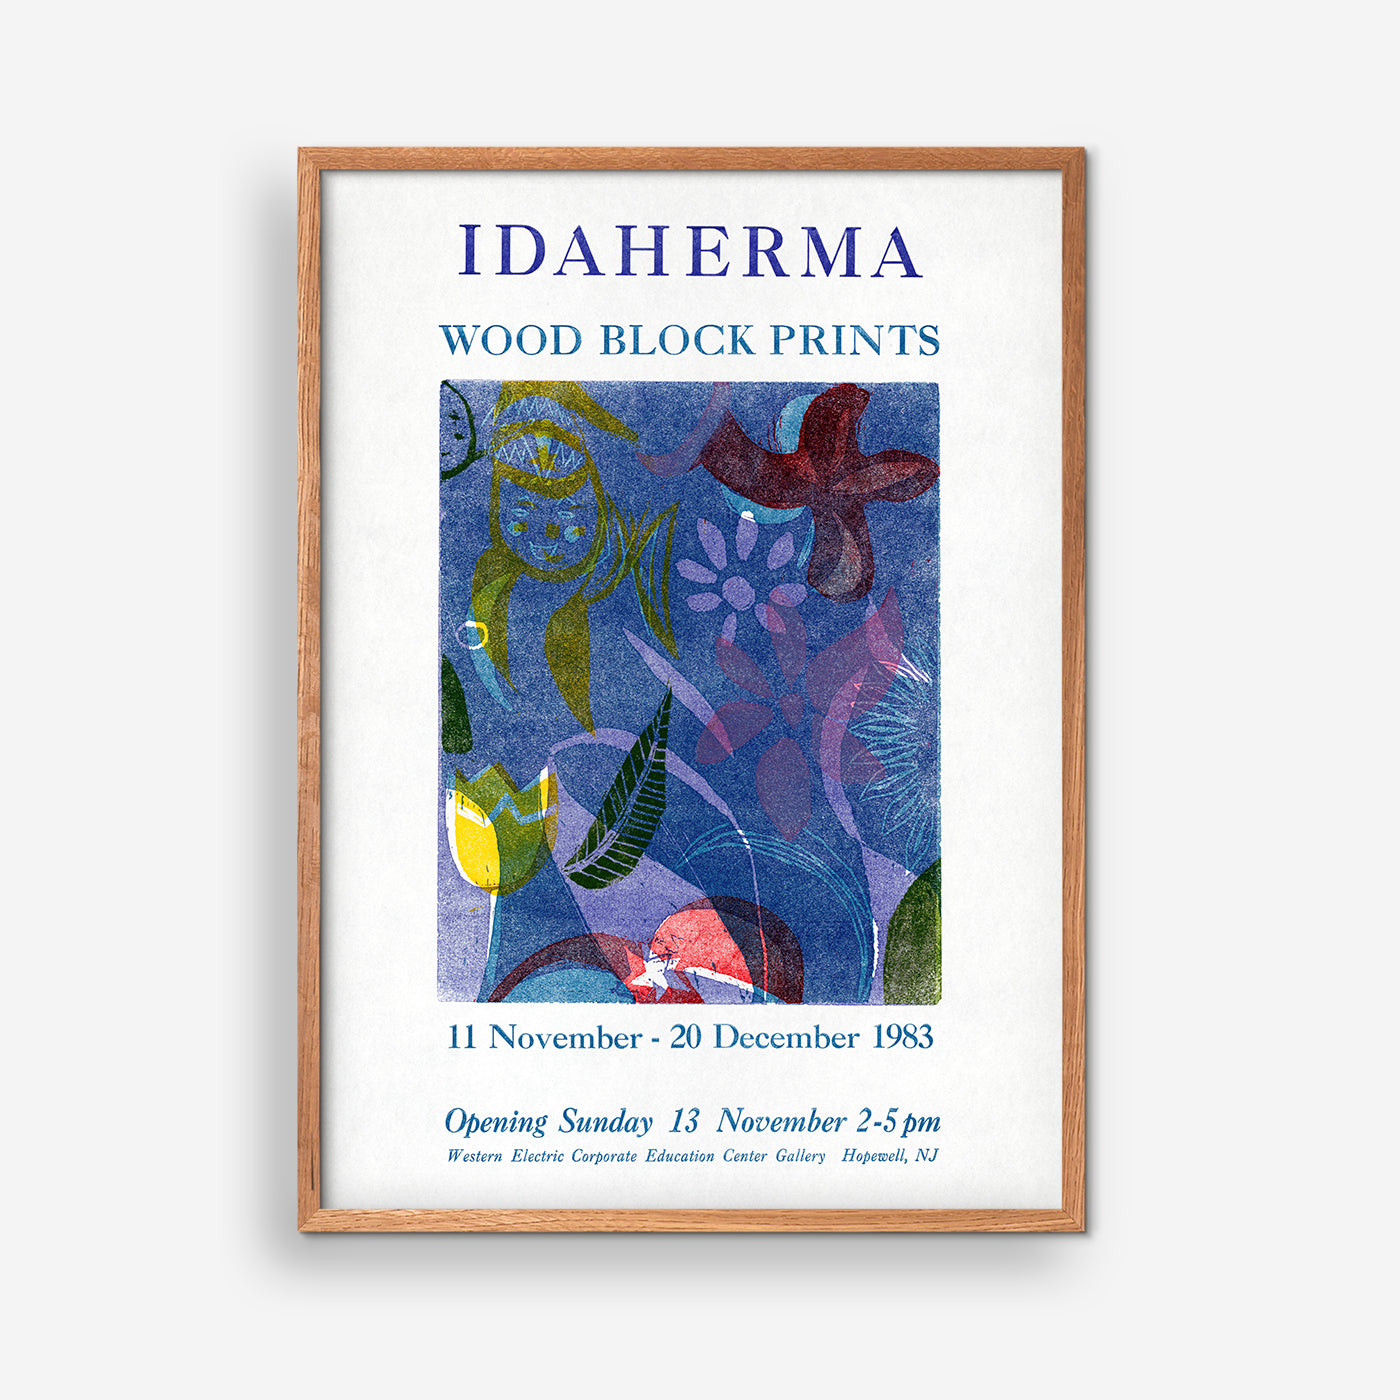 Idaherma wood block prints, 1983 - Idaherma Williams